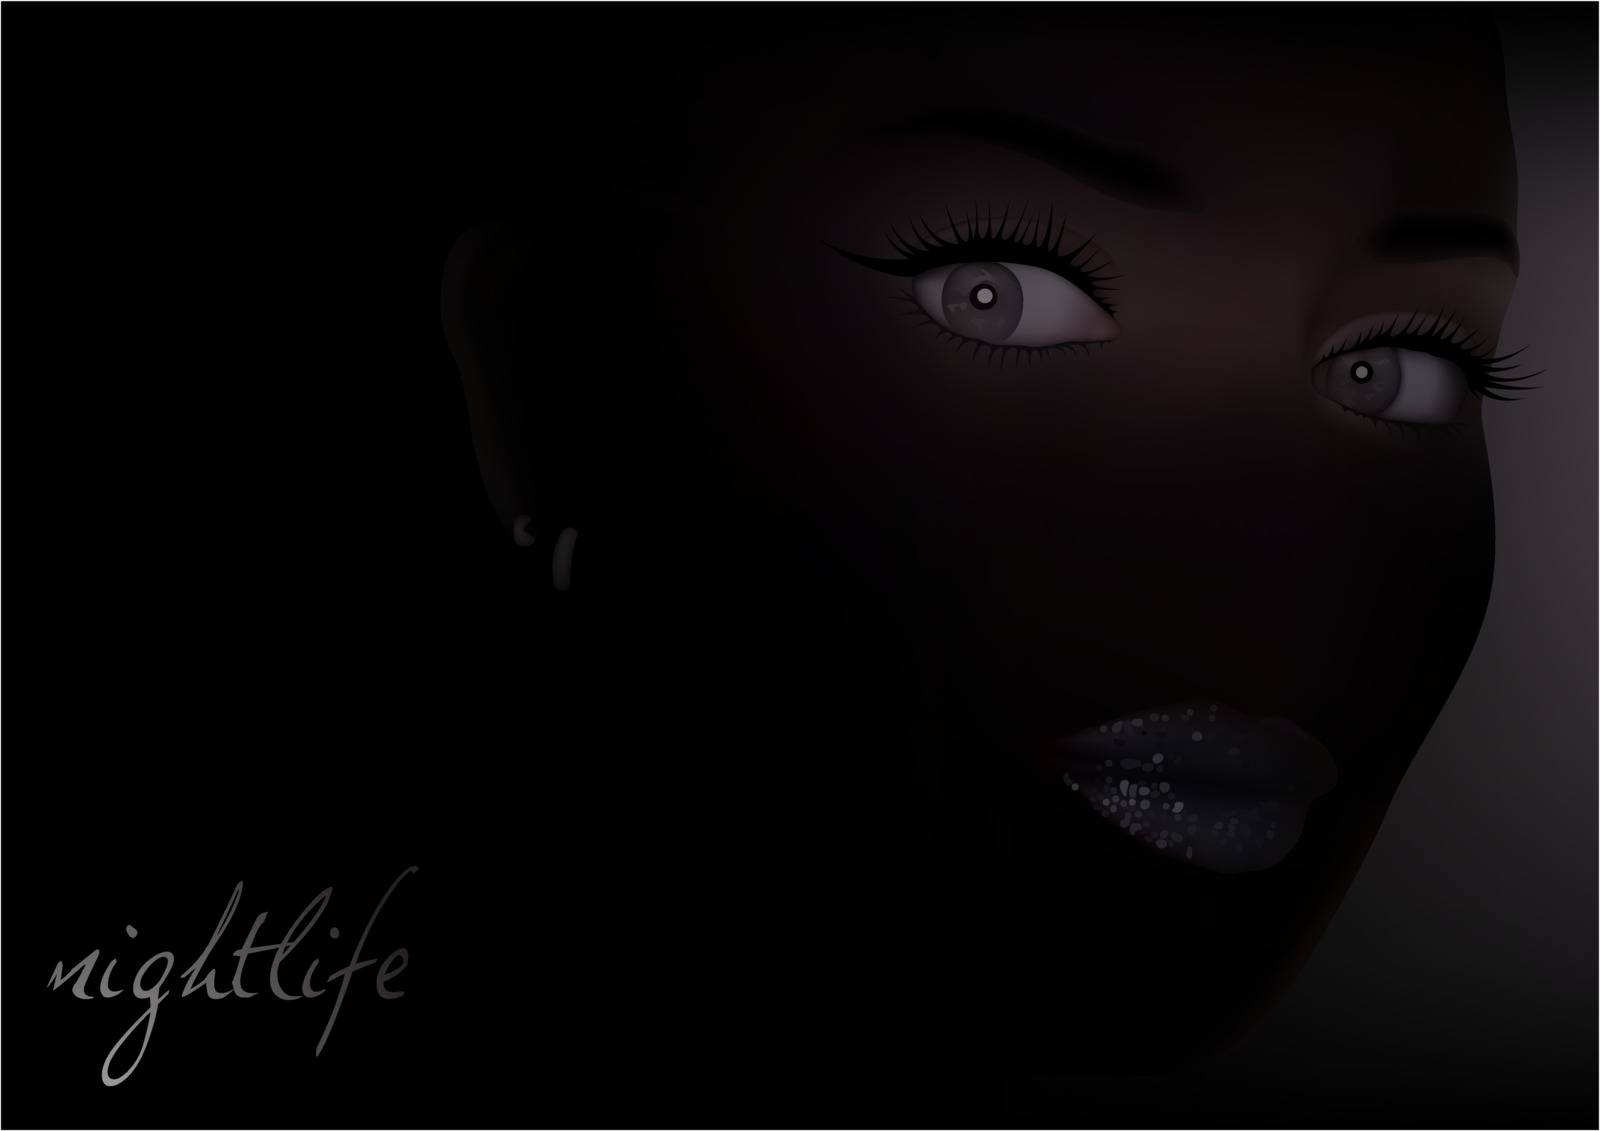 Woman Face In The Dark by illustratorCZ